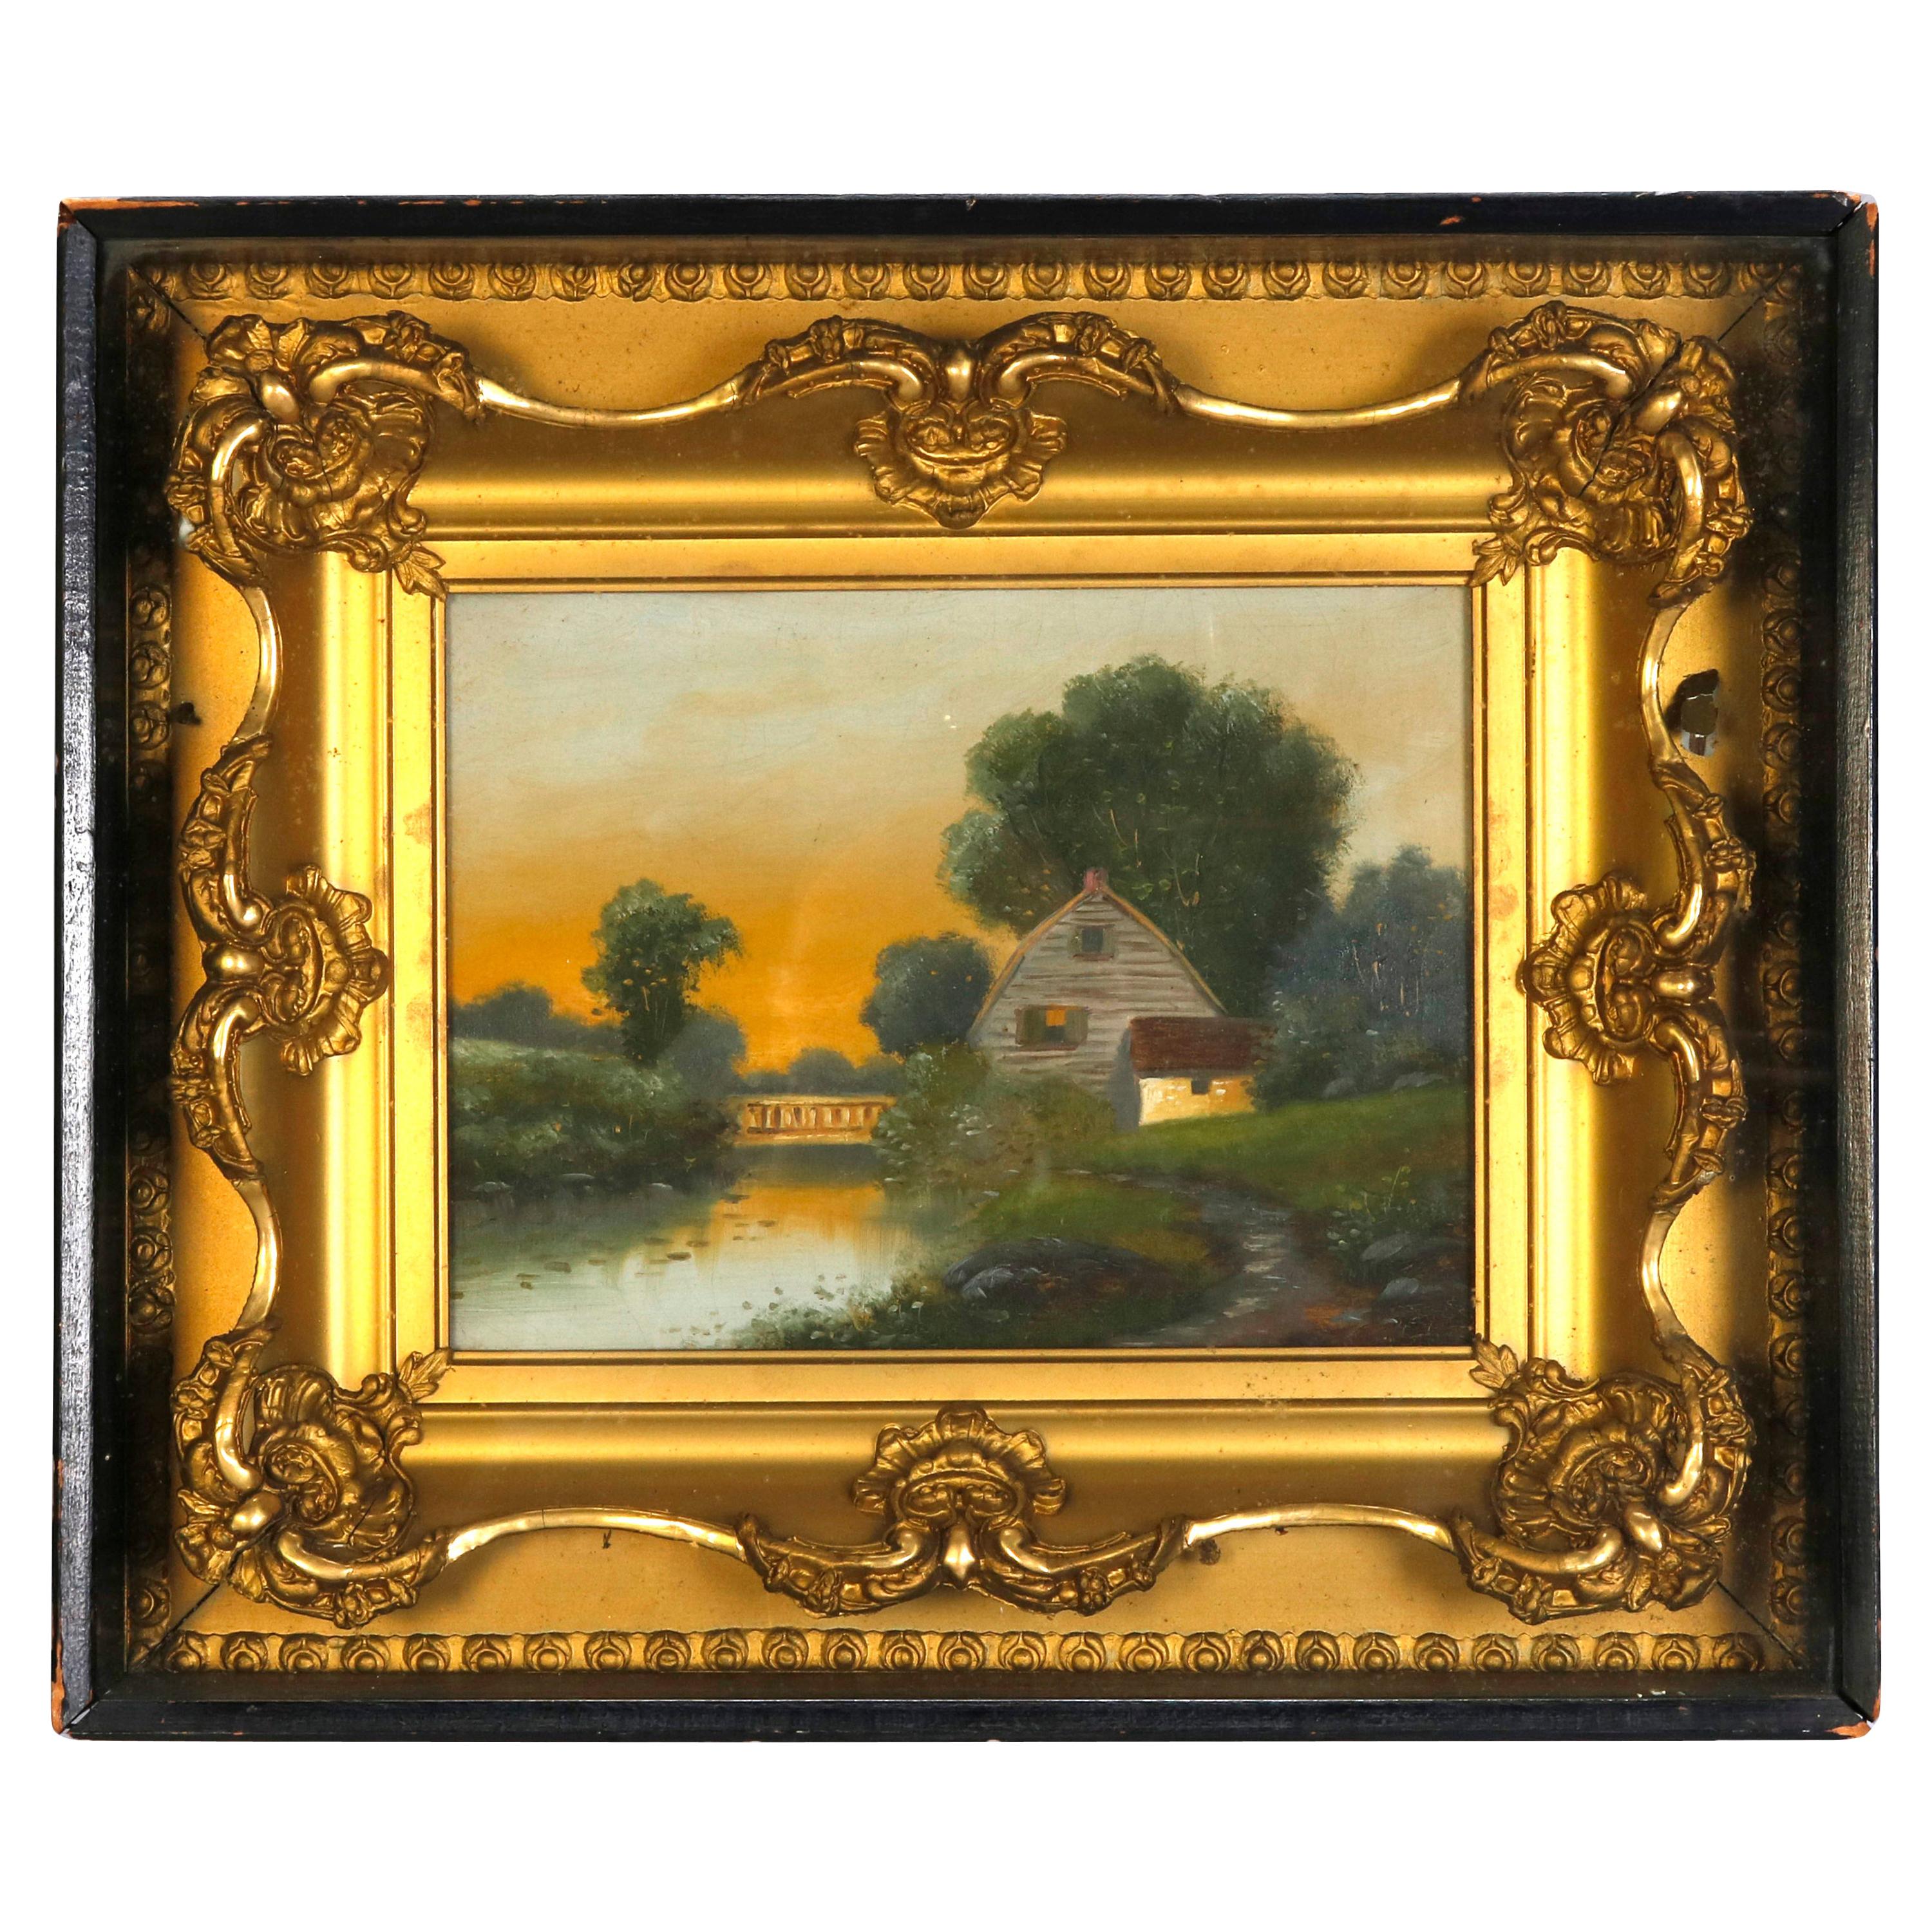 Antique Shadowbox Folk Art Oil on Canvas Landscape Painting with Farmhouse